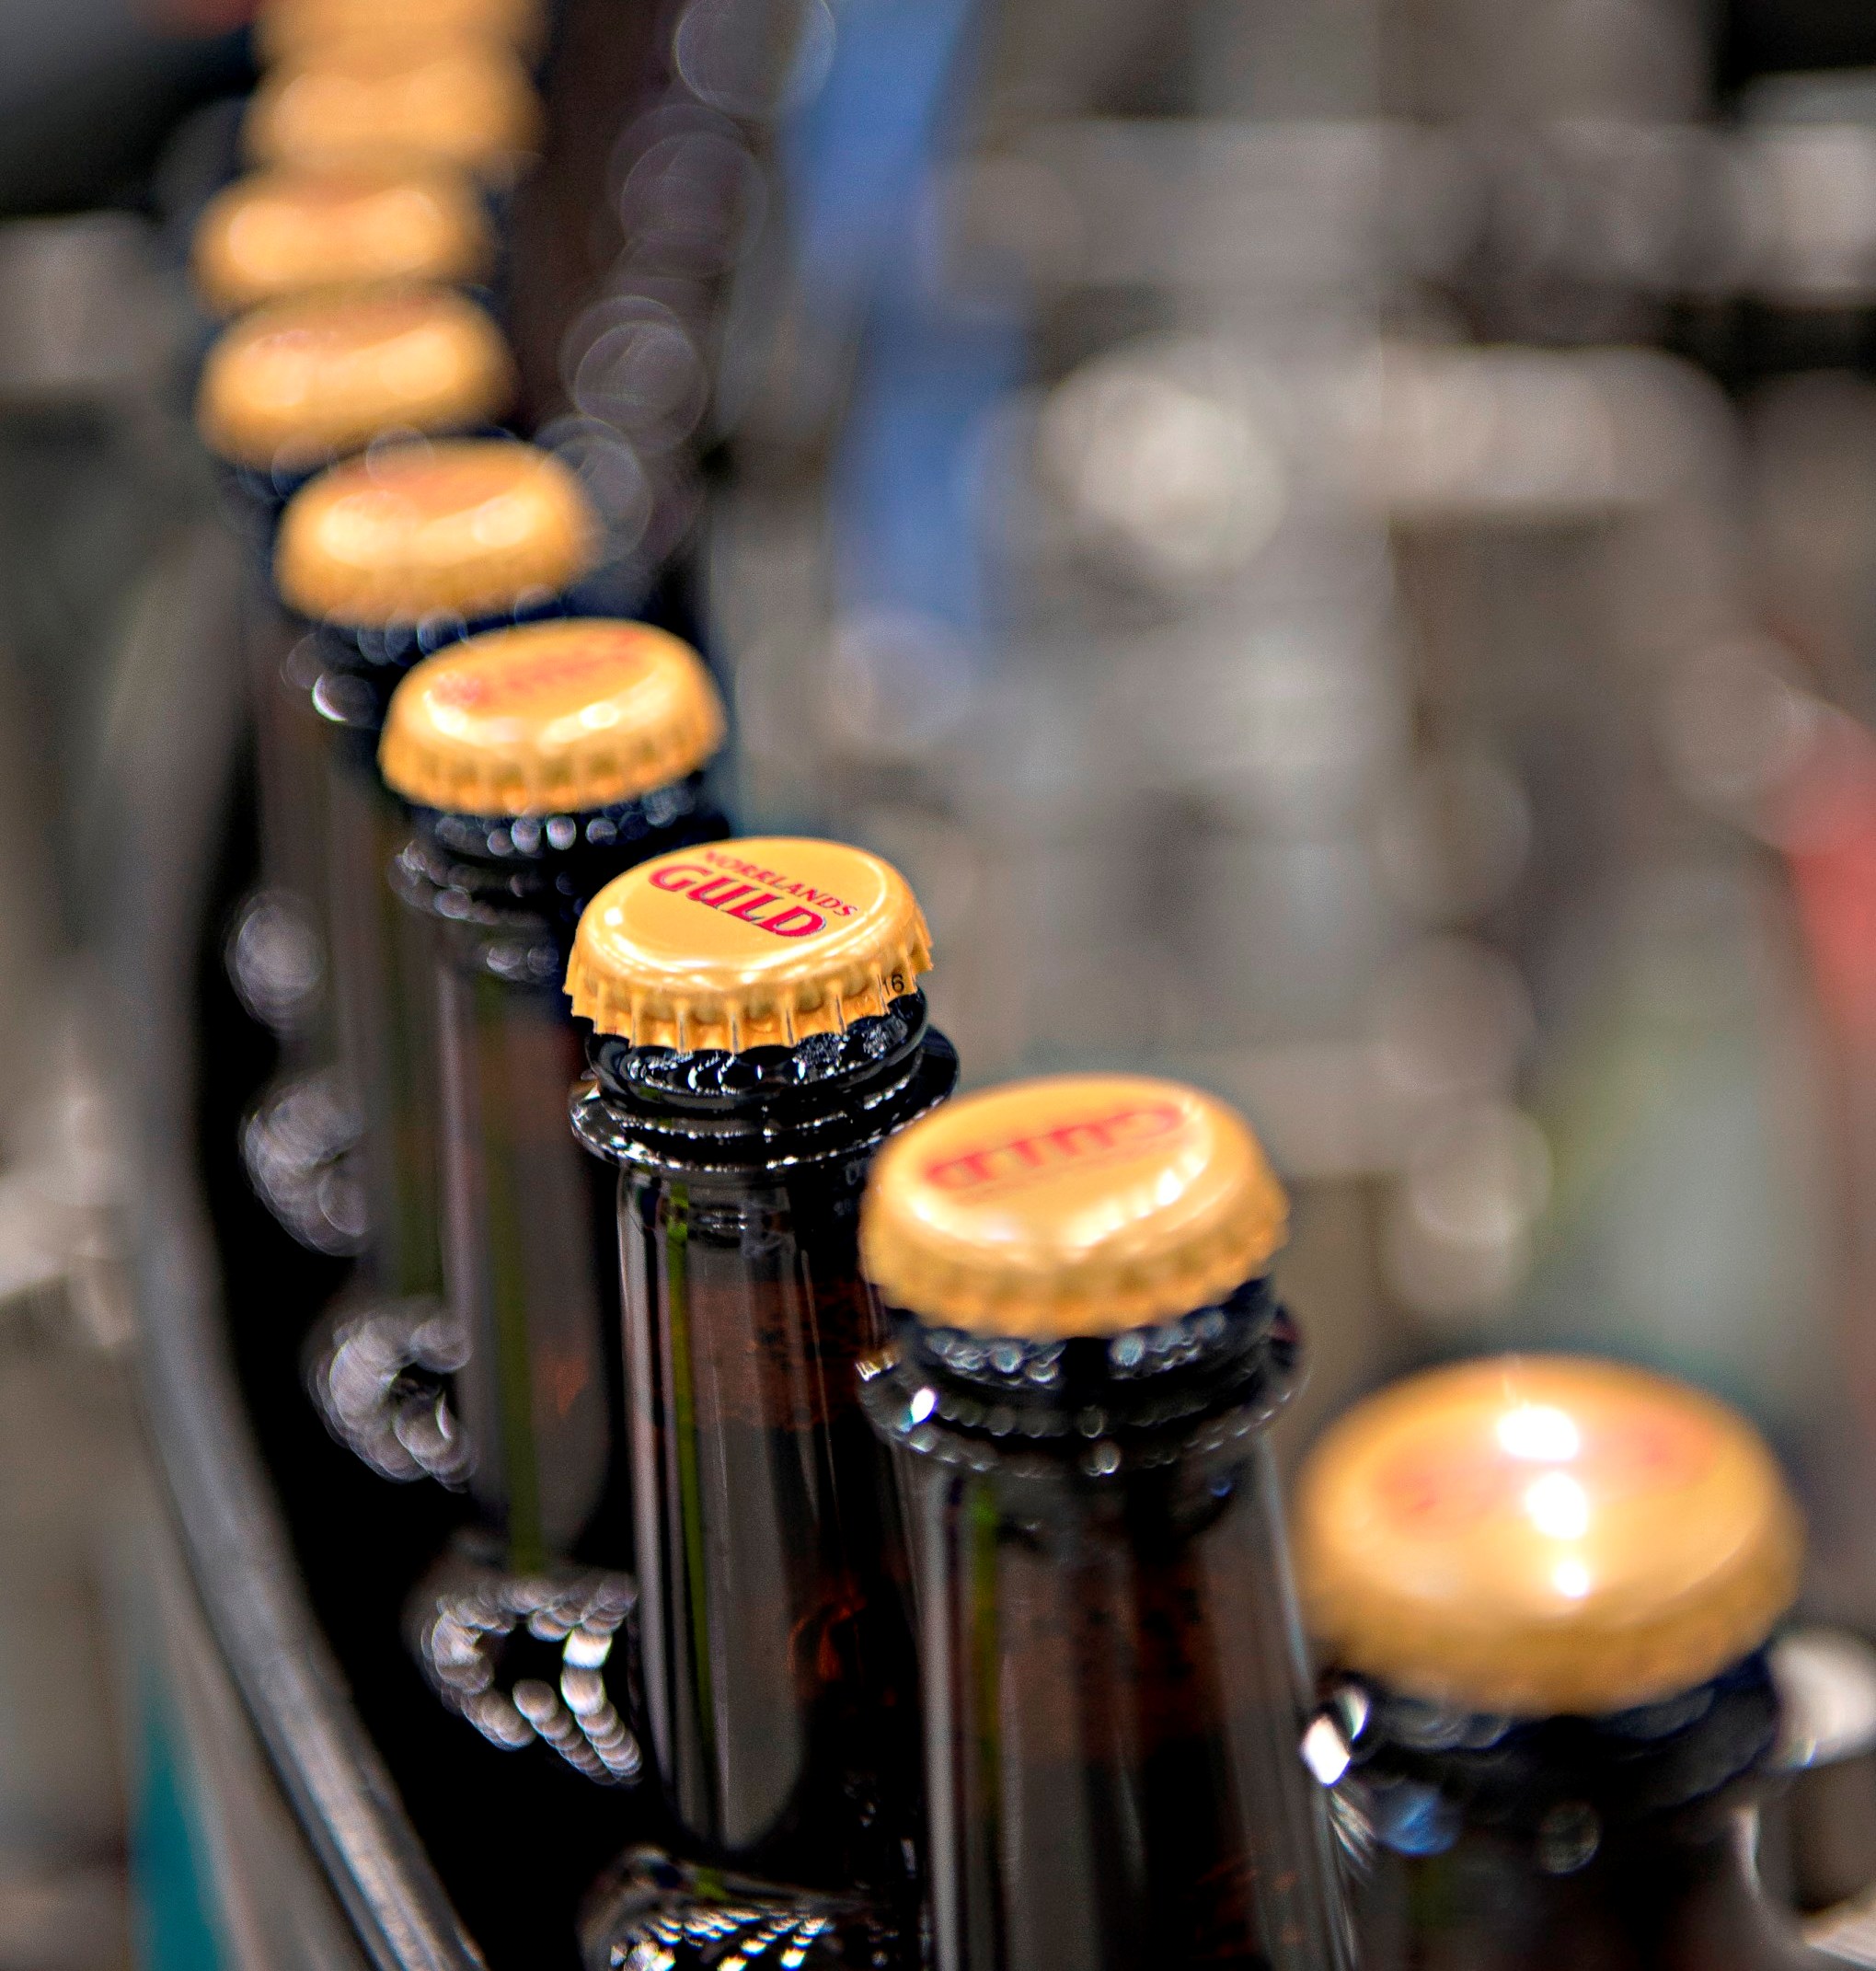 Spendrups brewery bottling line